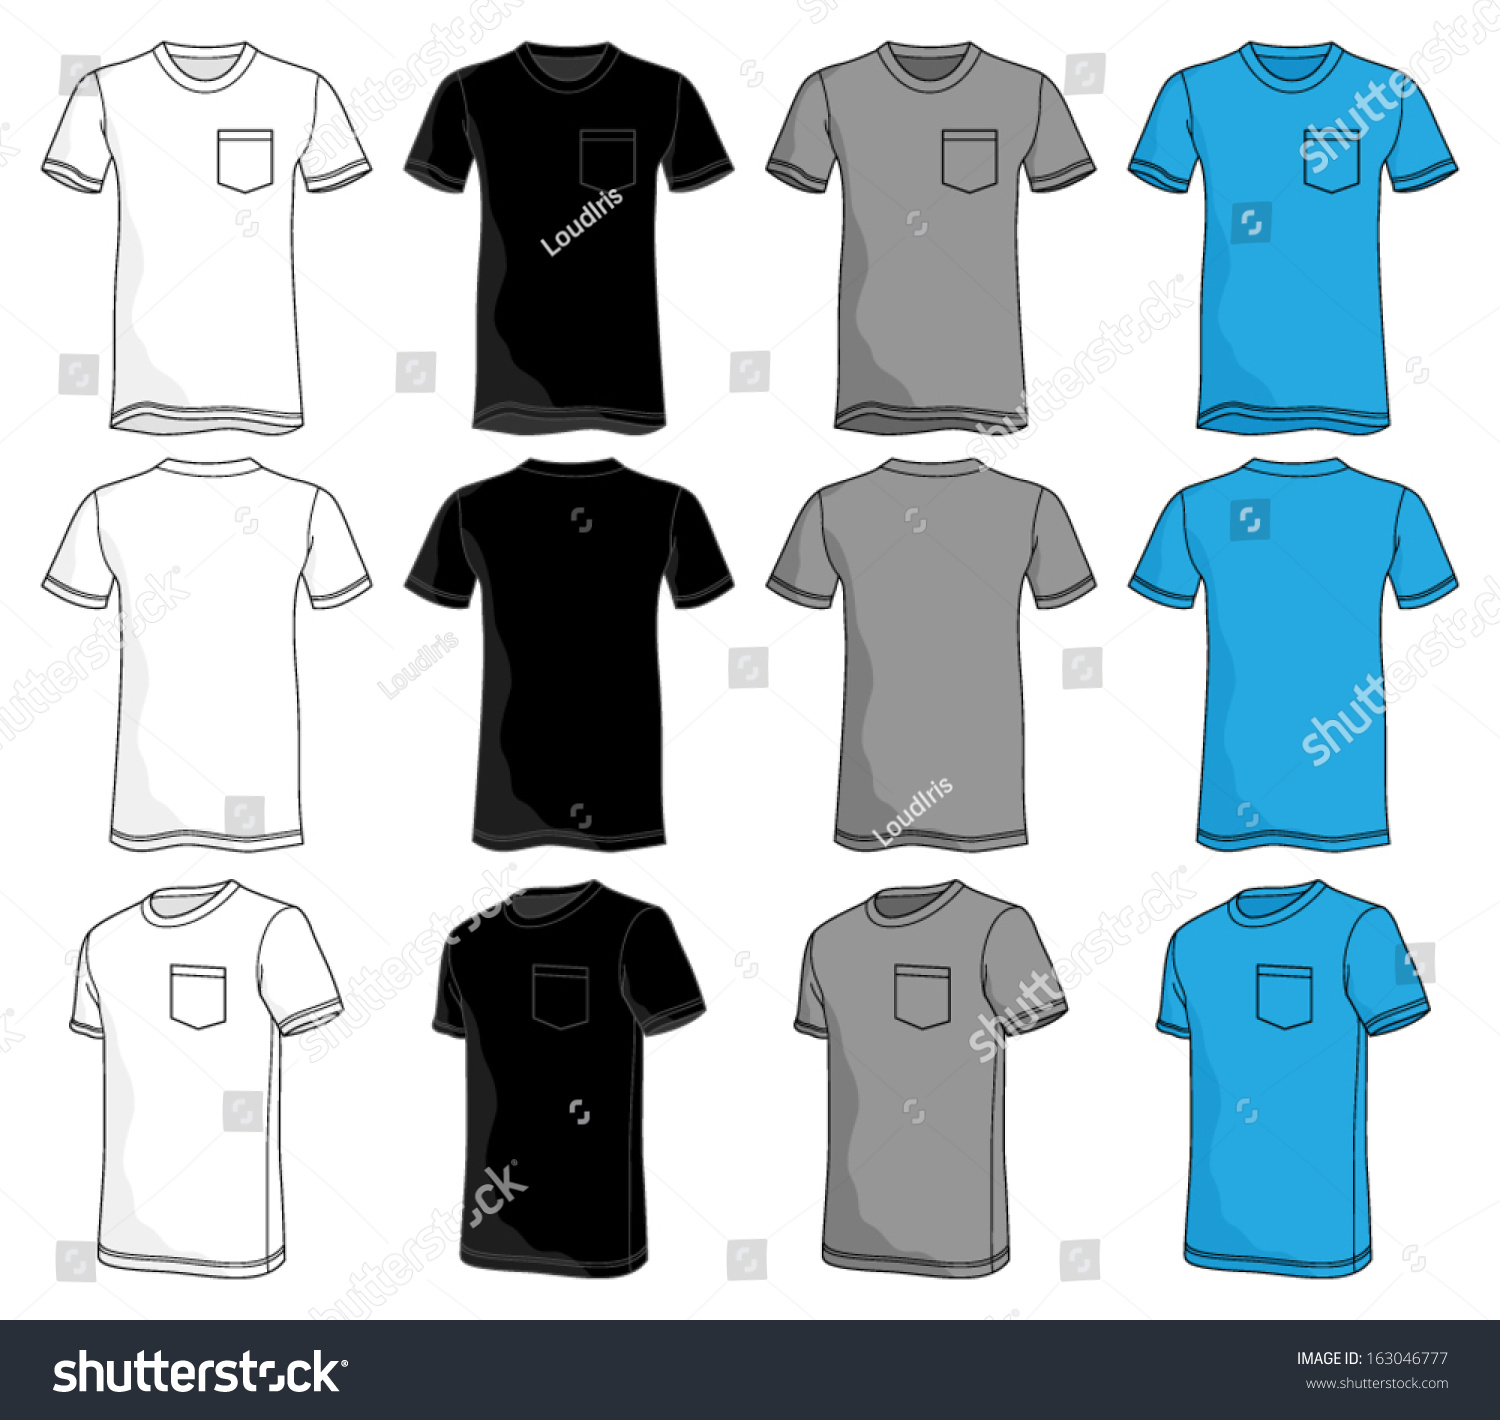 pocket-tshirt-template-stock-vector-163046777-shutterstock